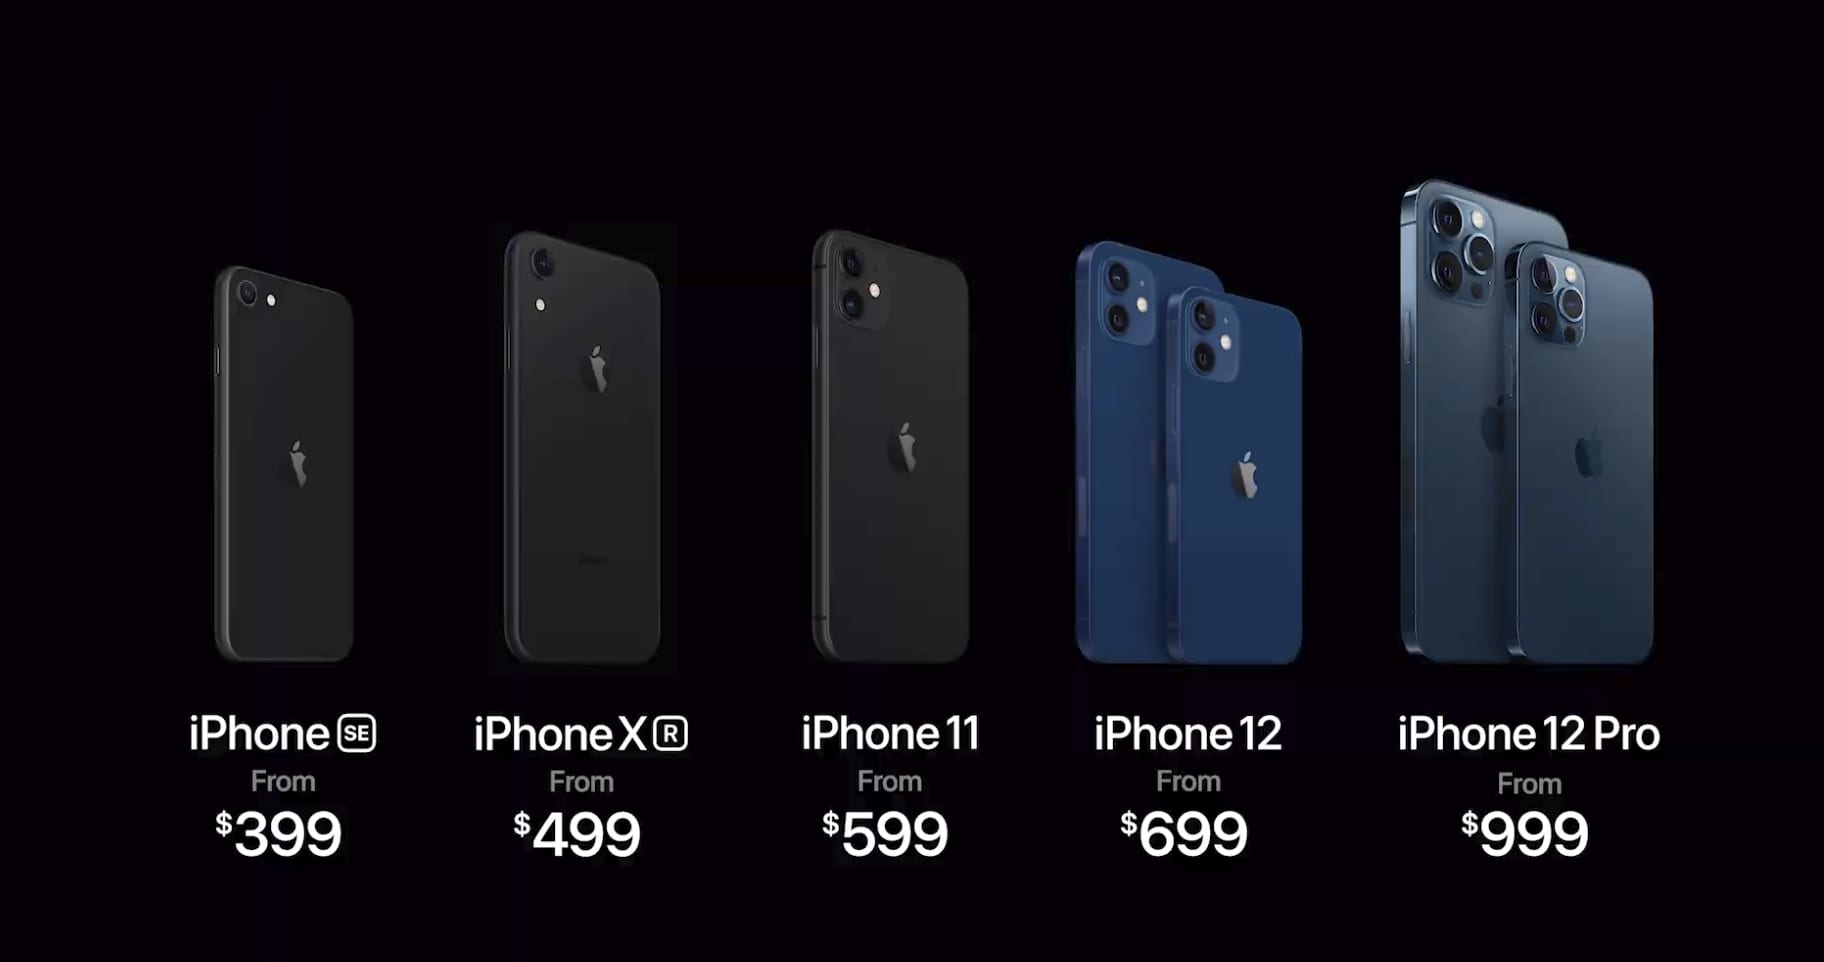 iphone 10 vs 11 size